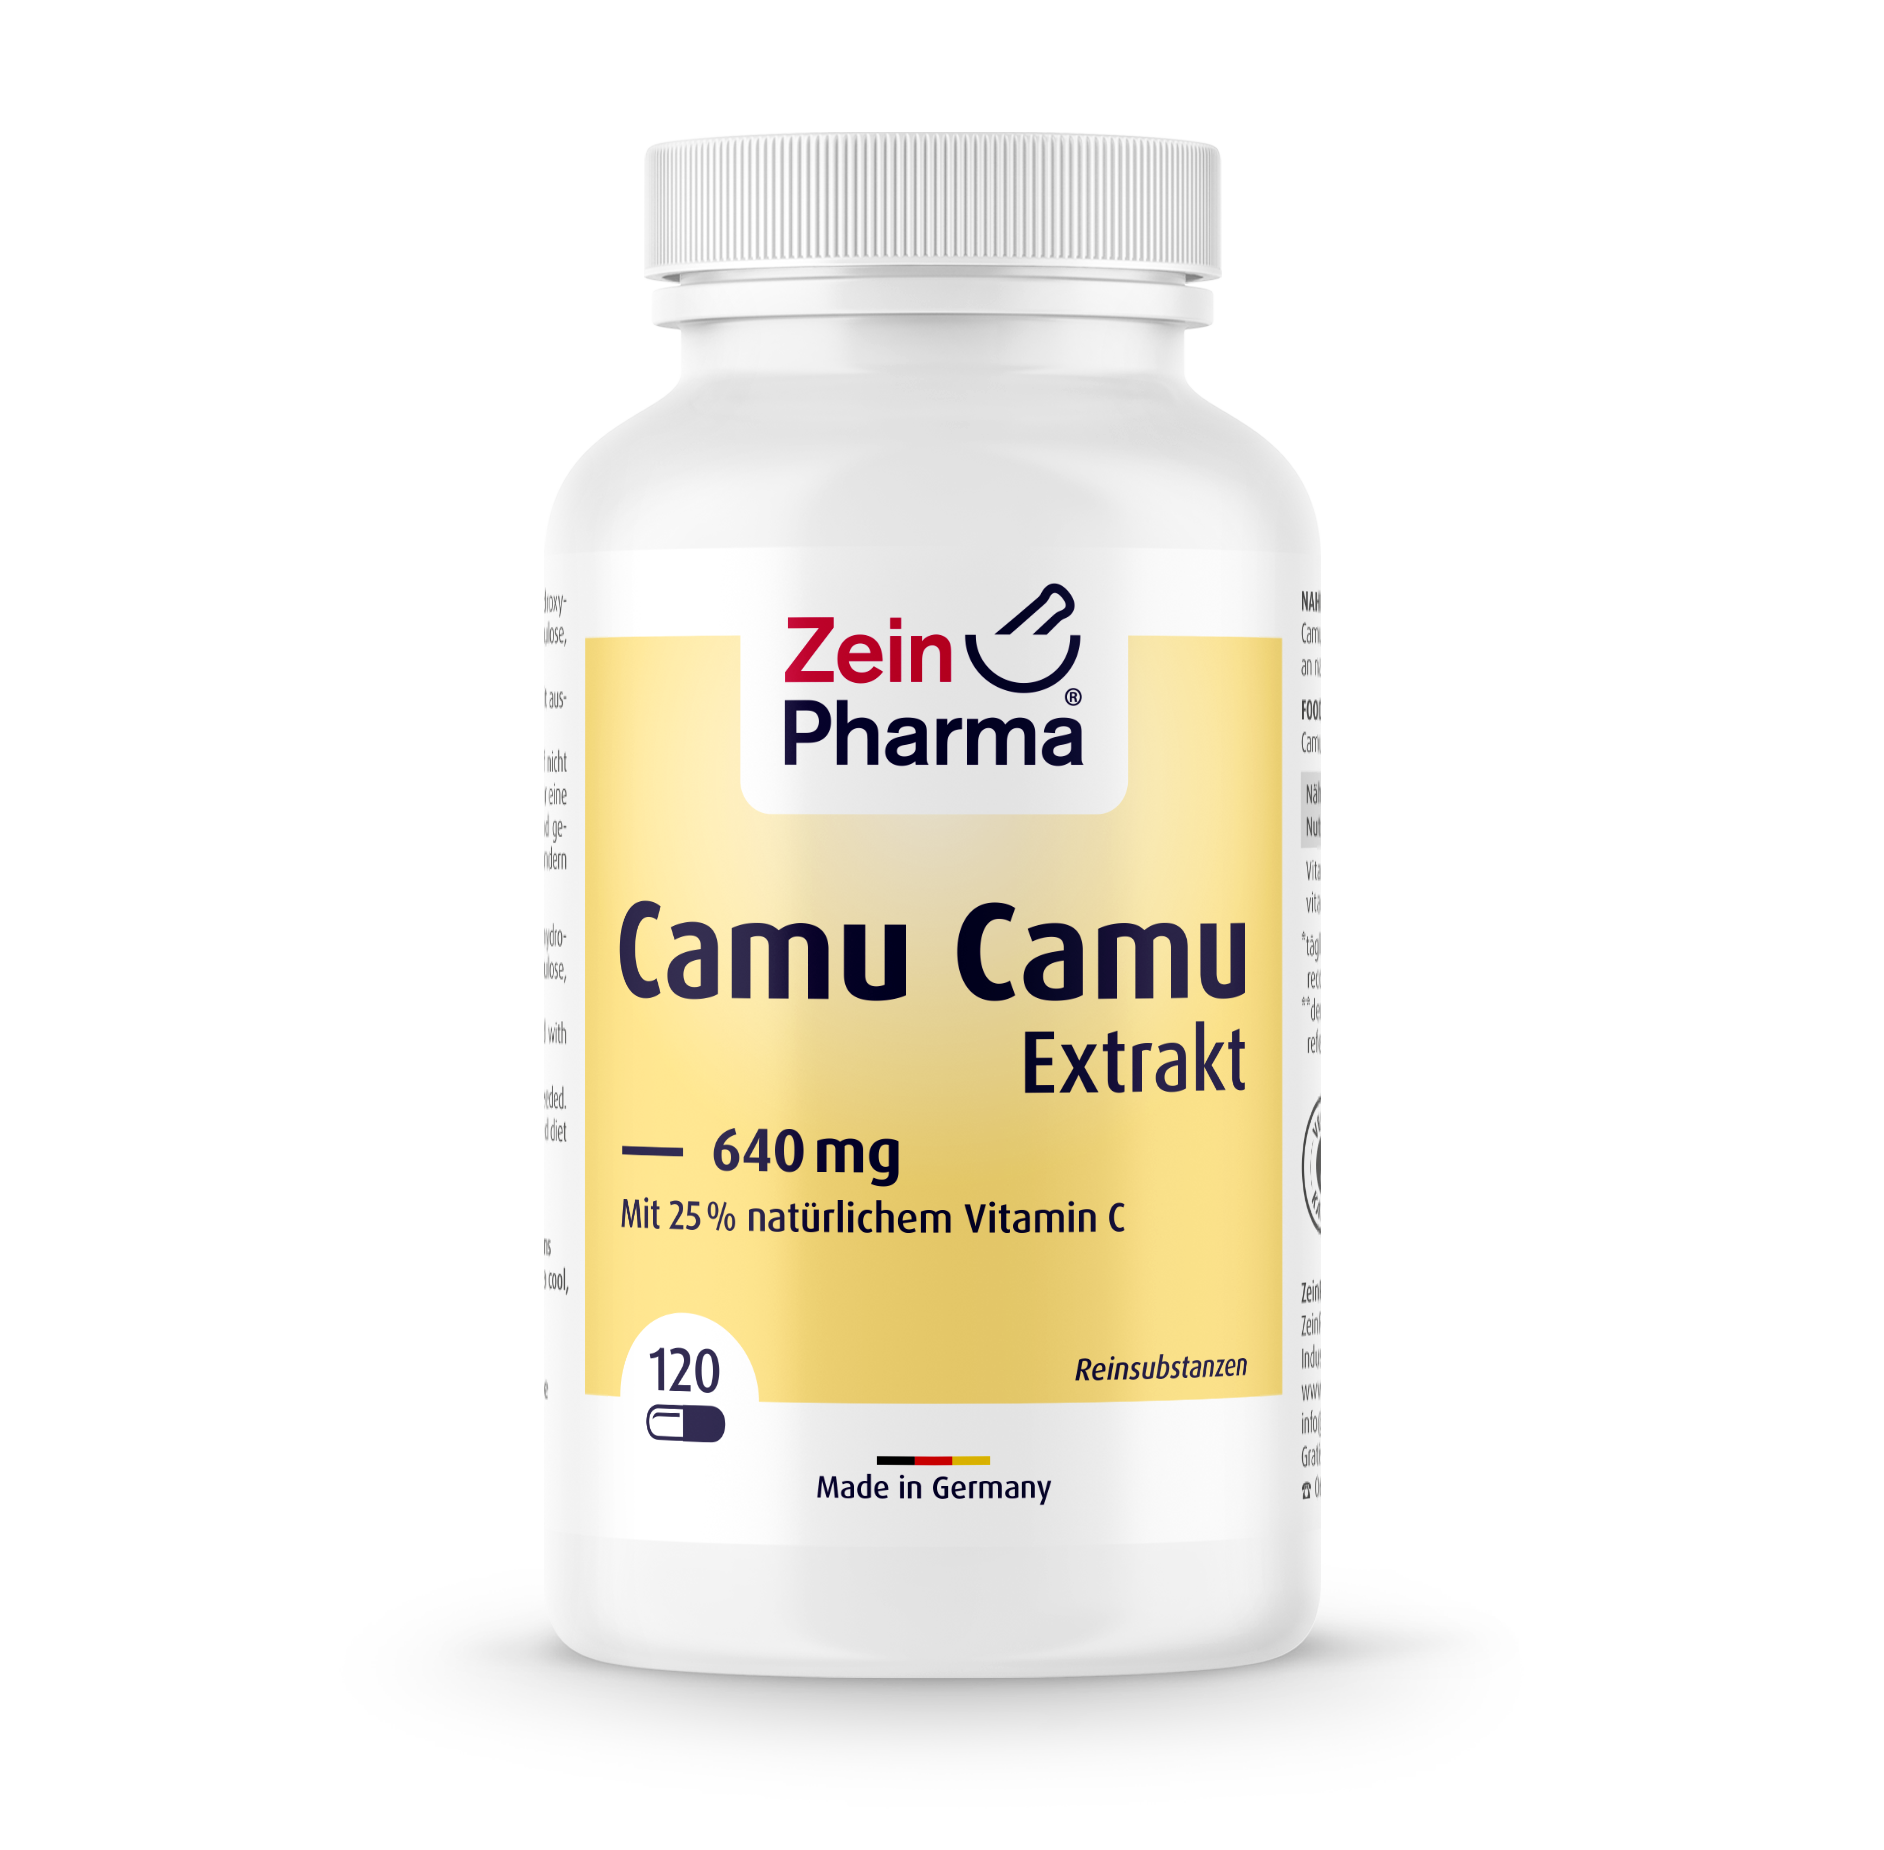 Zein Pharma Camu Camu 640mg 120 Caps - Out of Date